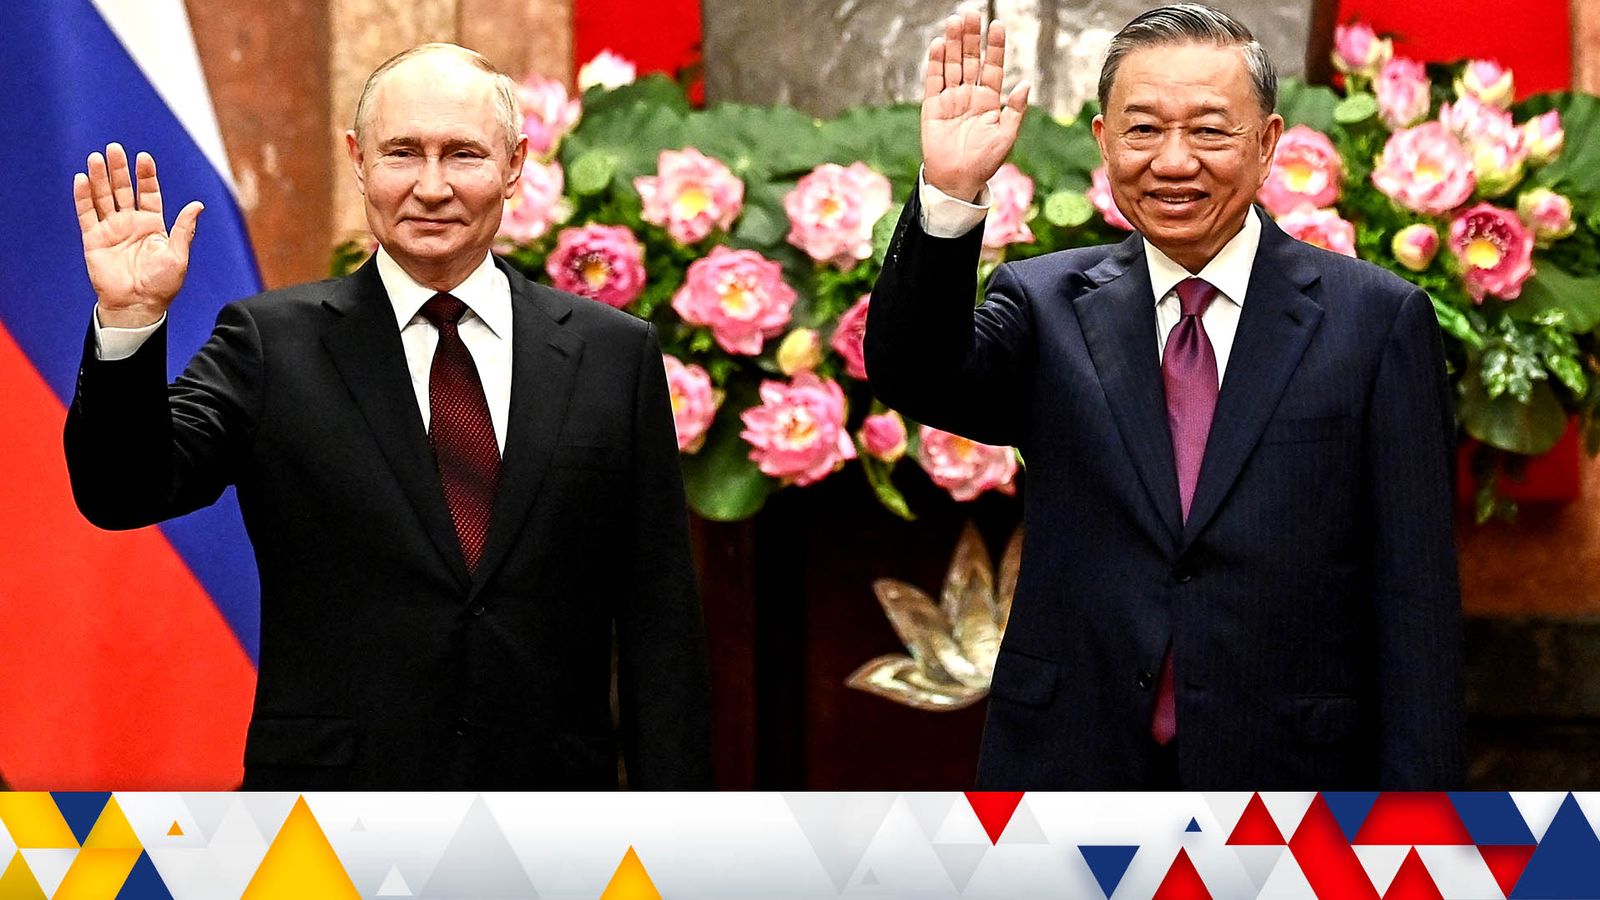 Latest on Ukraine War: Putin on State Visit in Vietnam as Russia and Ukraine exchange overnight attacks